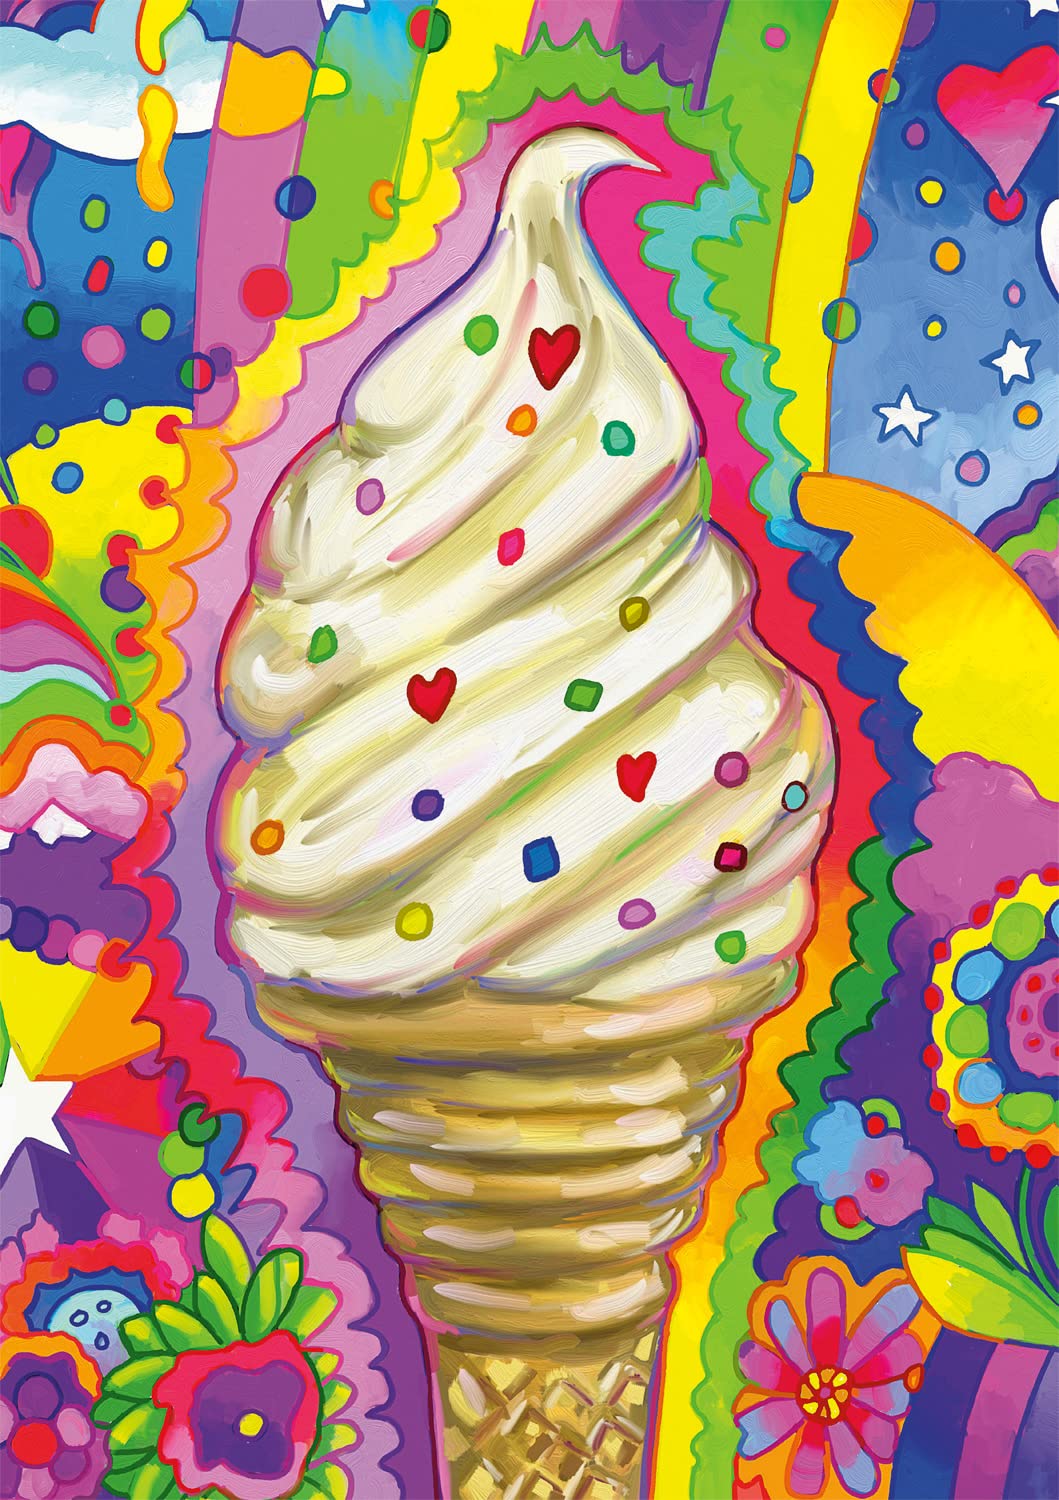 Buffalo Games - Ice Cream Pop Art - 300 große Puzzleteile